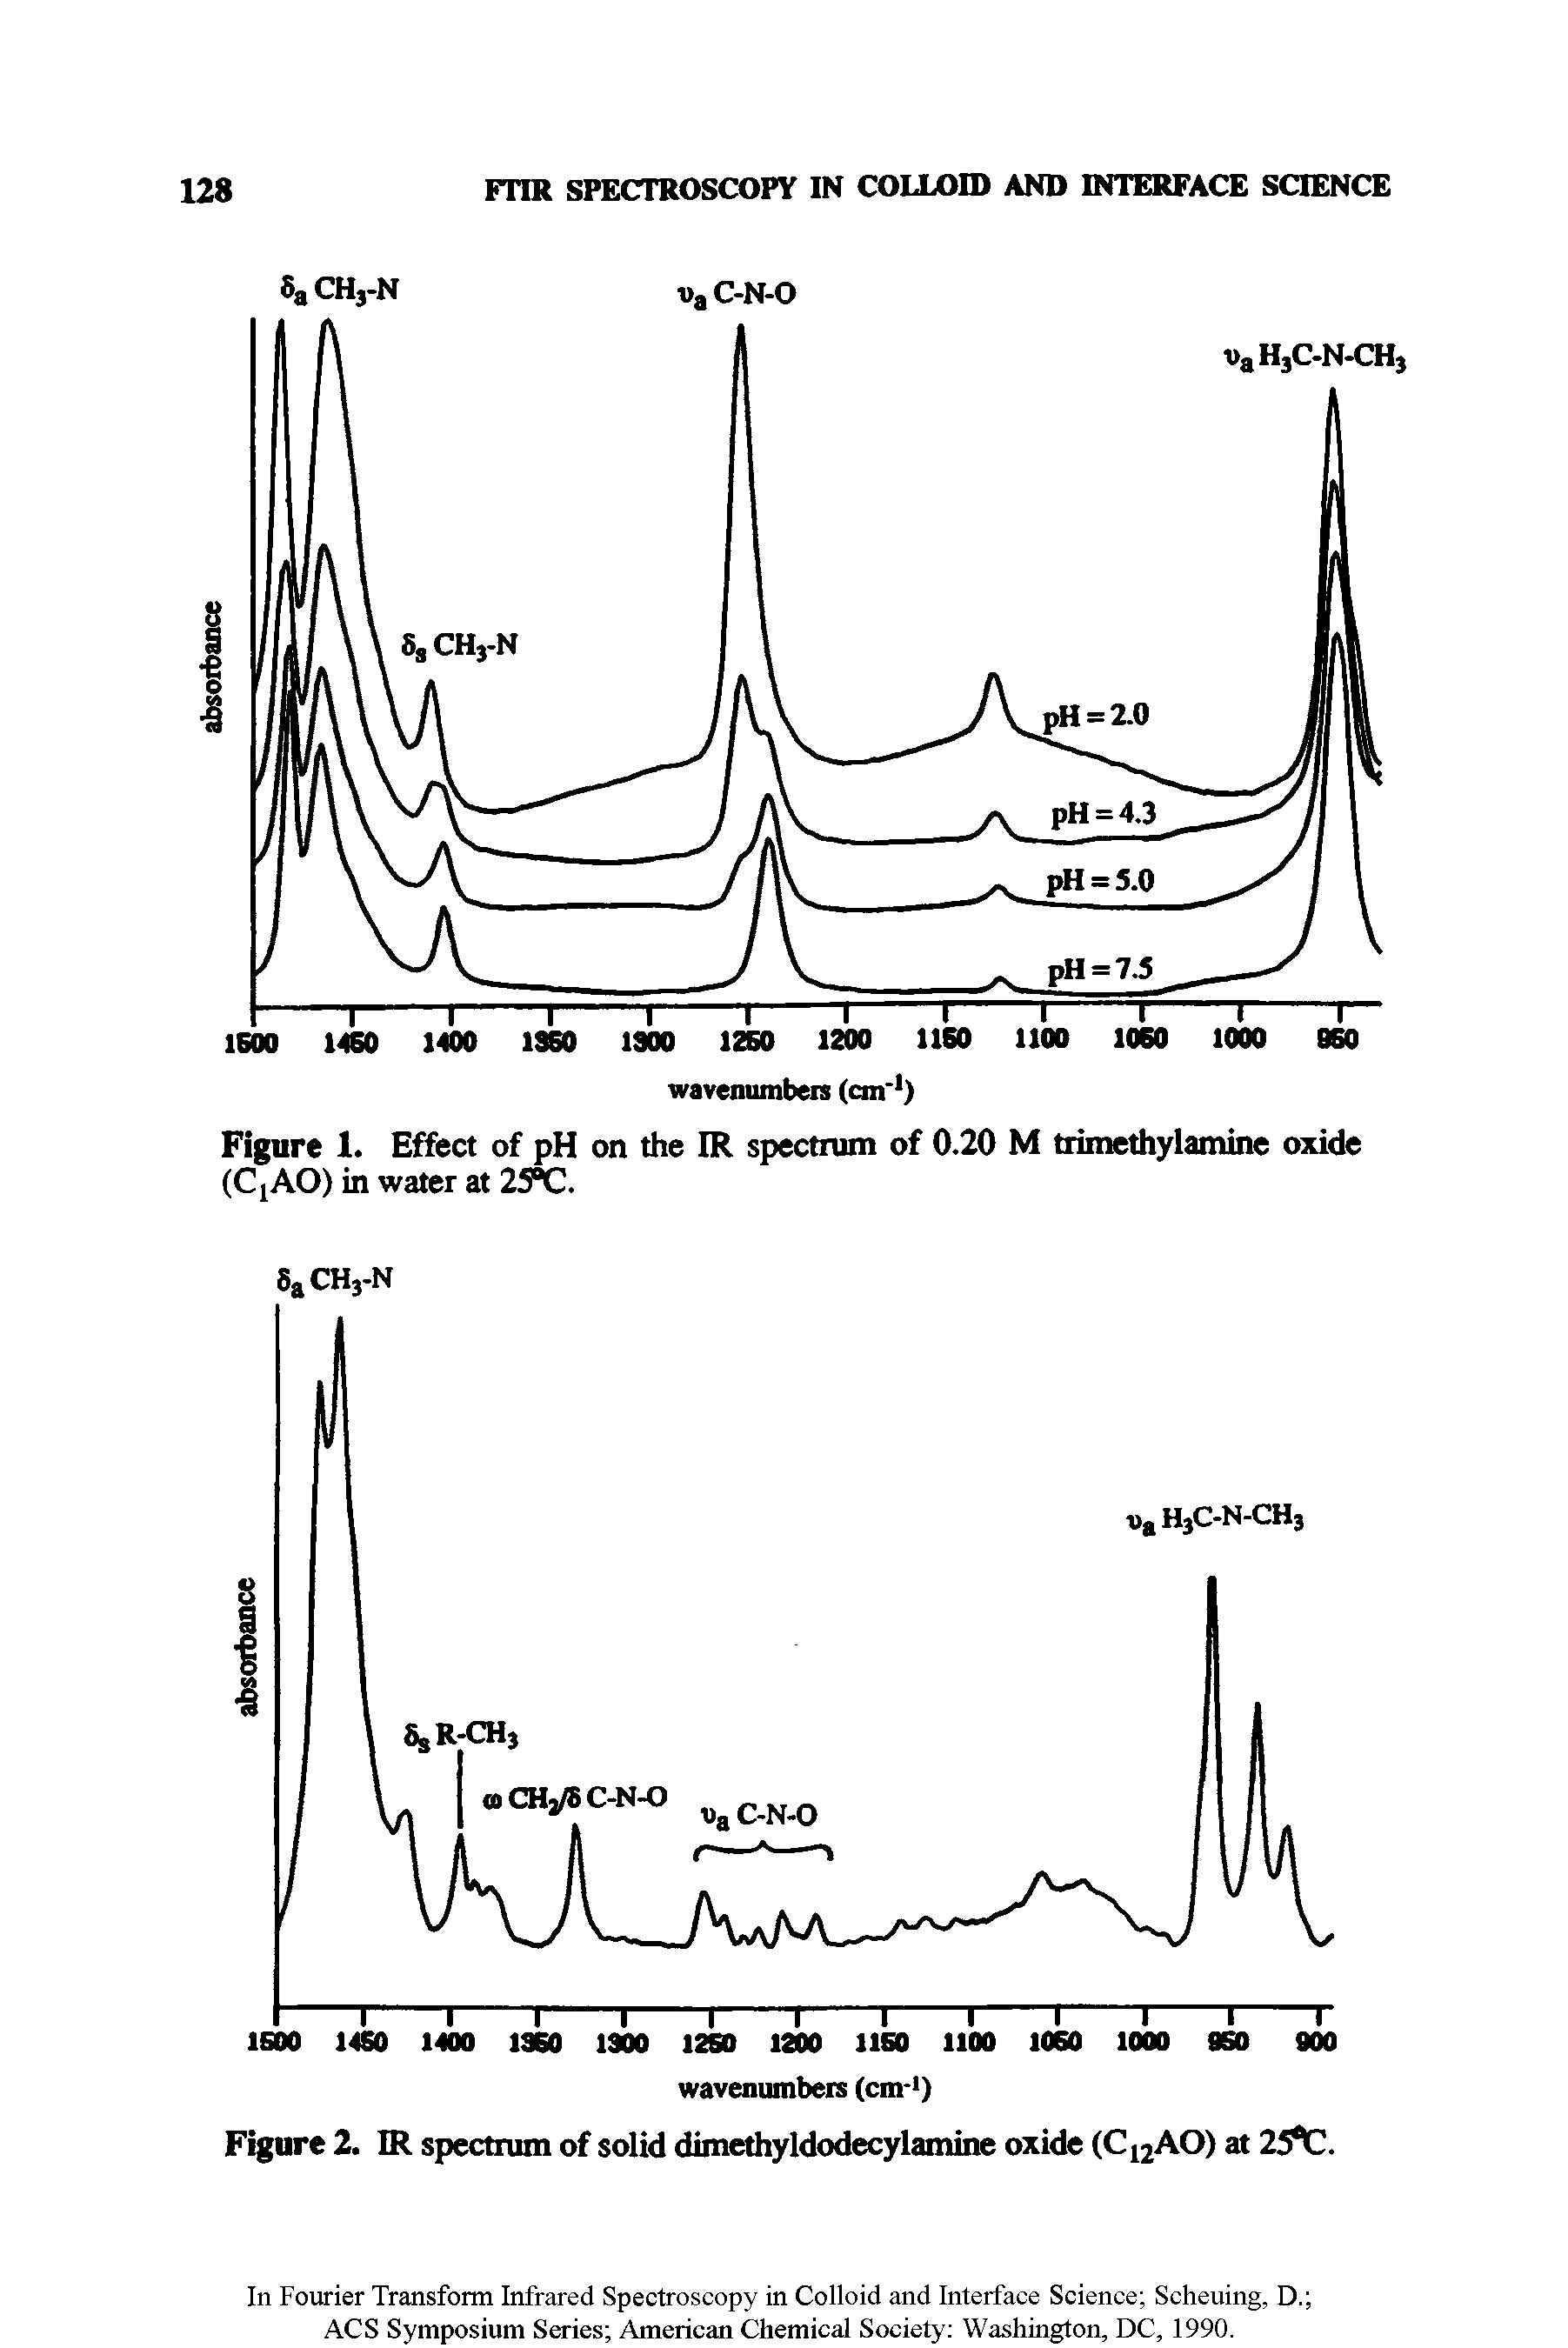 Figure 2. IR spectrum of solid dimethyldodecylamine oxide (C12AO) at 25 C.